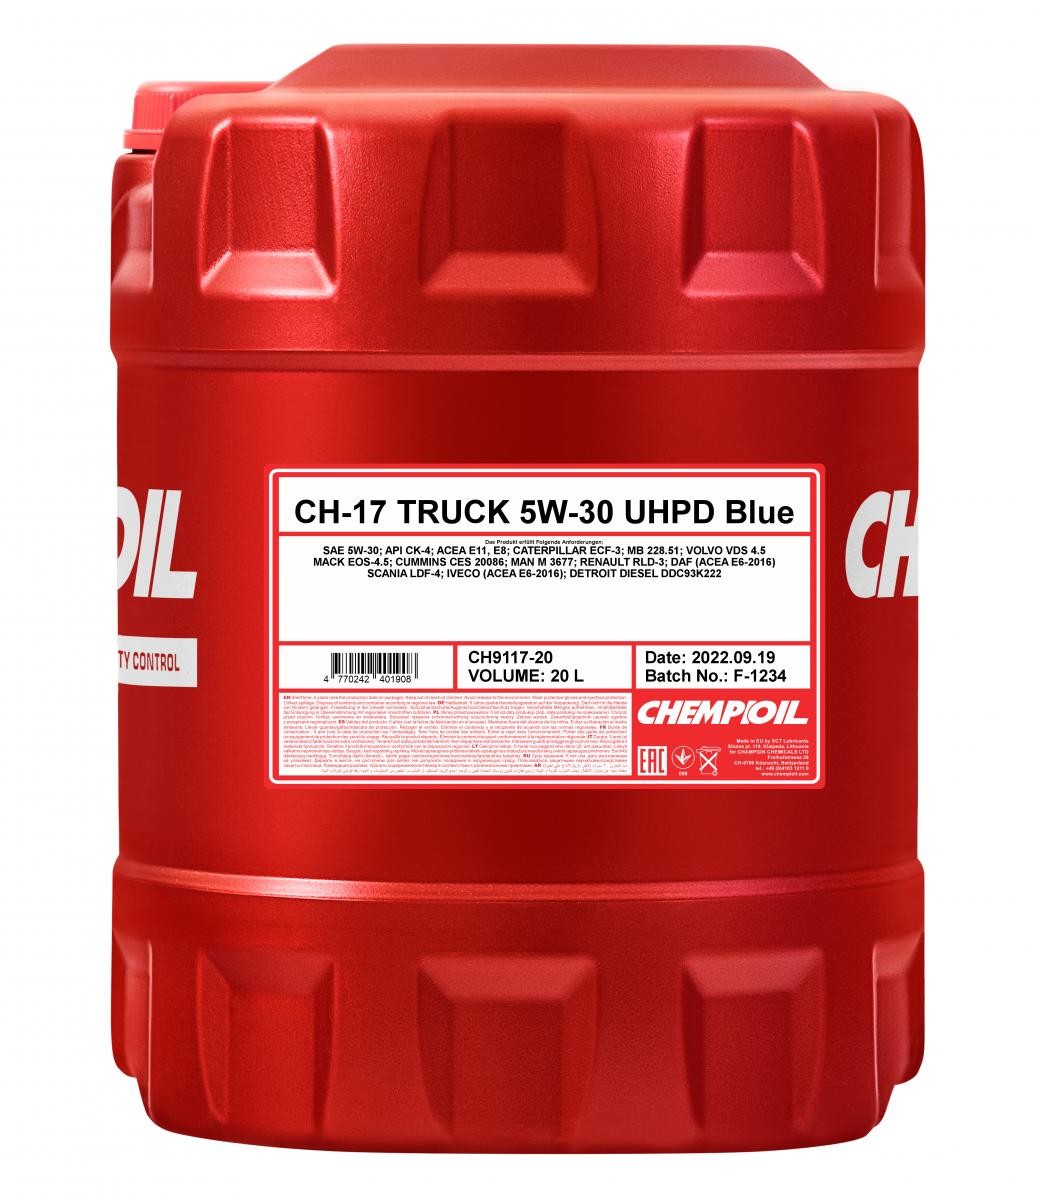 Comprar Aceite de motor CHEMPIOIL CH9117-20 Truck, UHPD Blue CH-17 5W-30, 20L